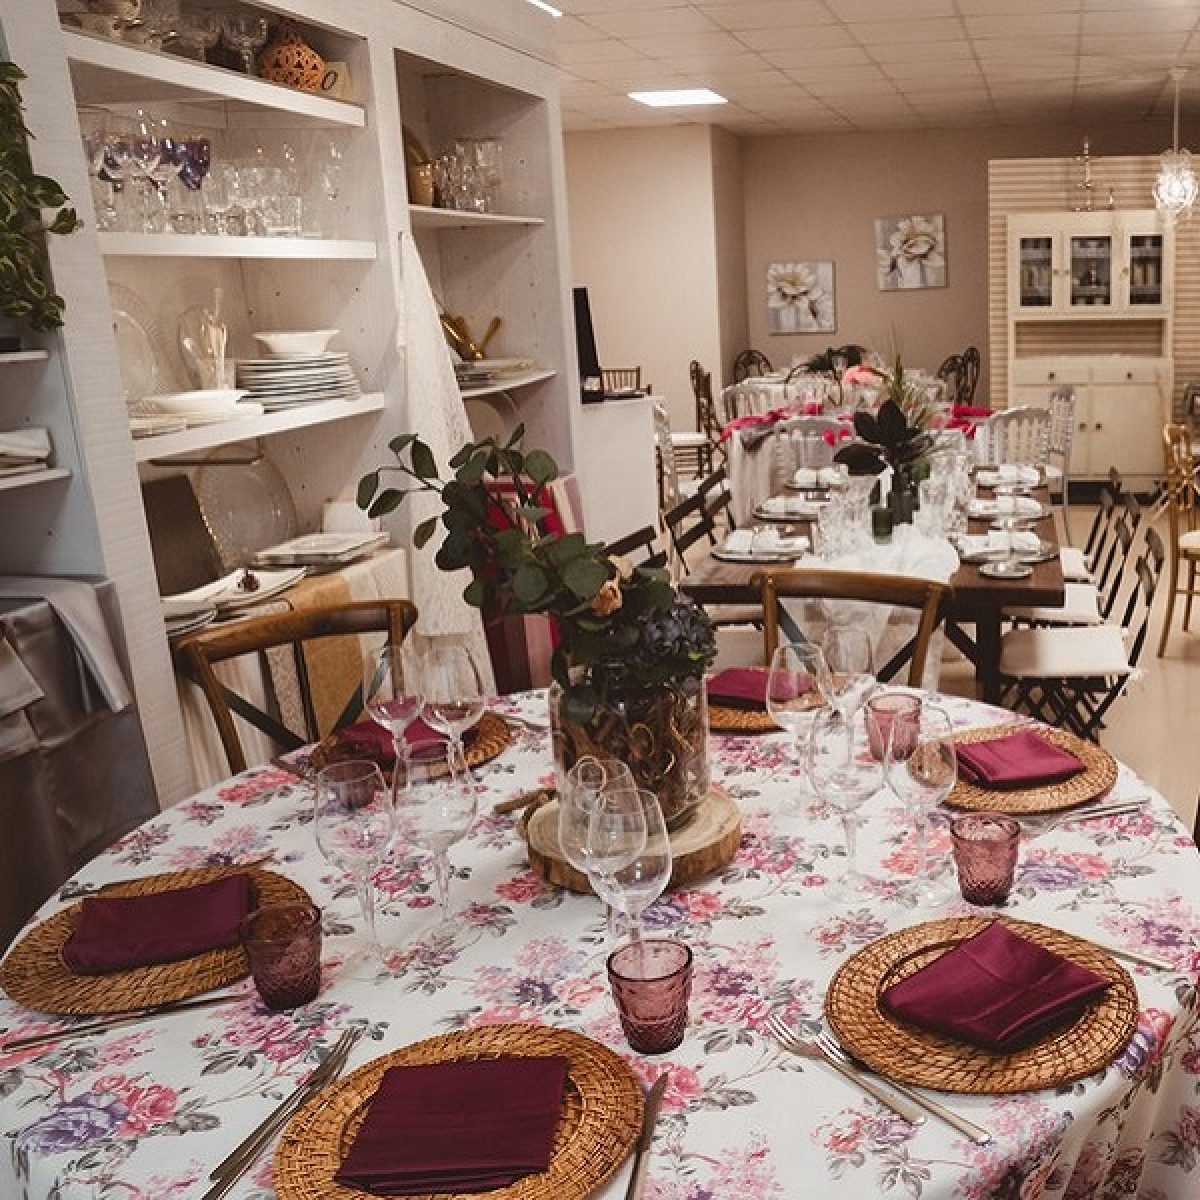 Spoleto: The Showroom - Apollinare Catering